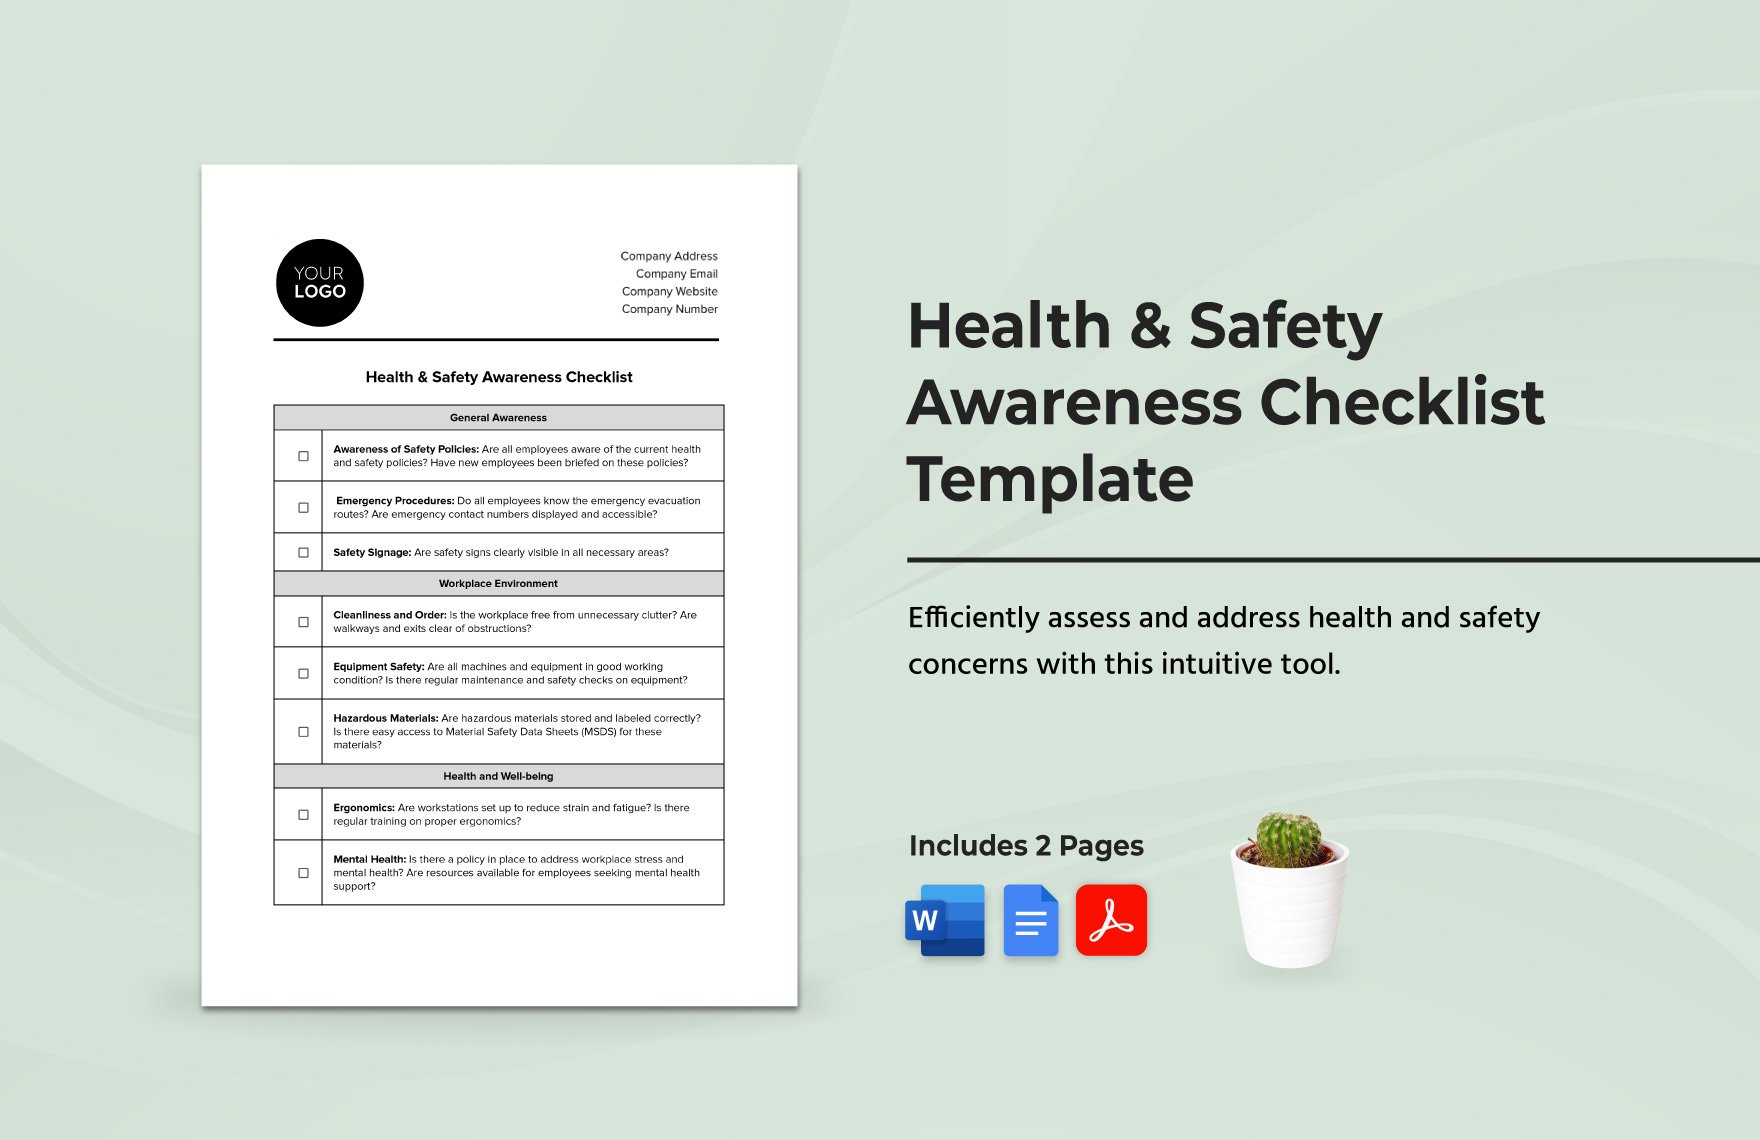 Health & Safety Awareness Checklist Template